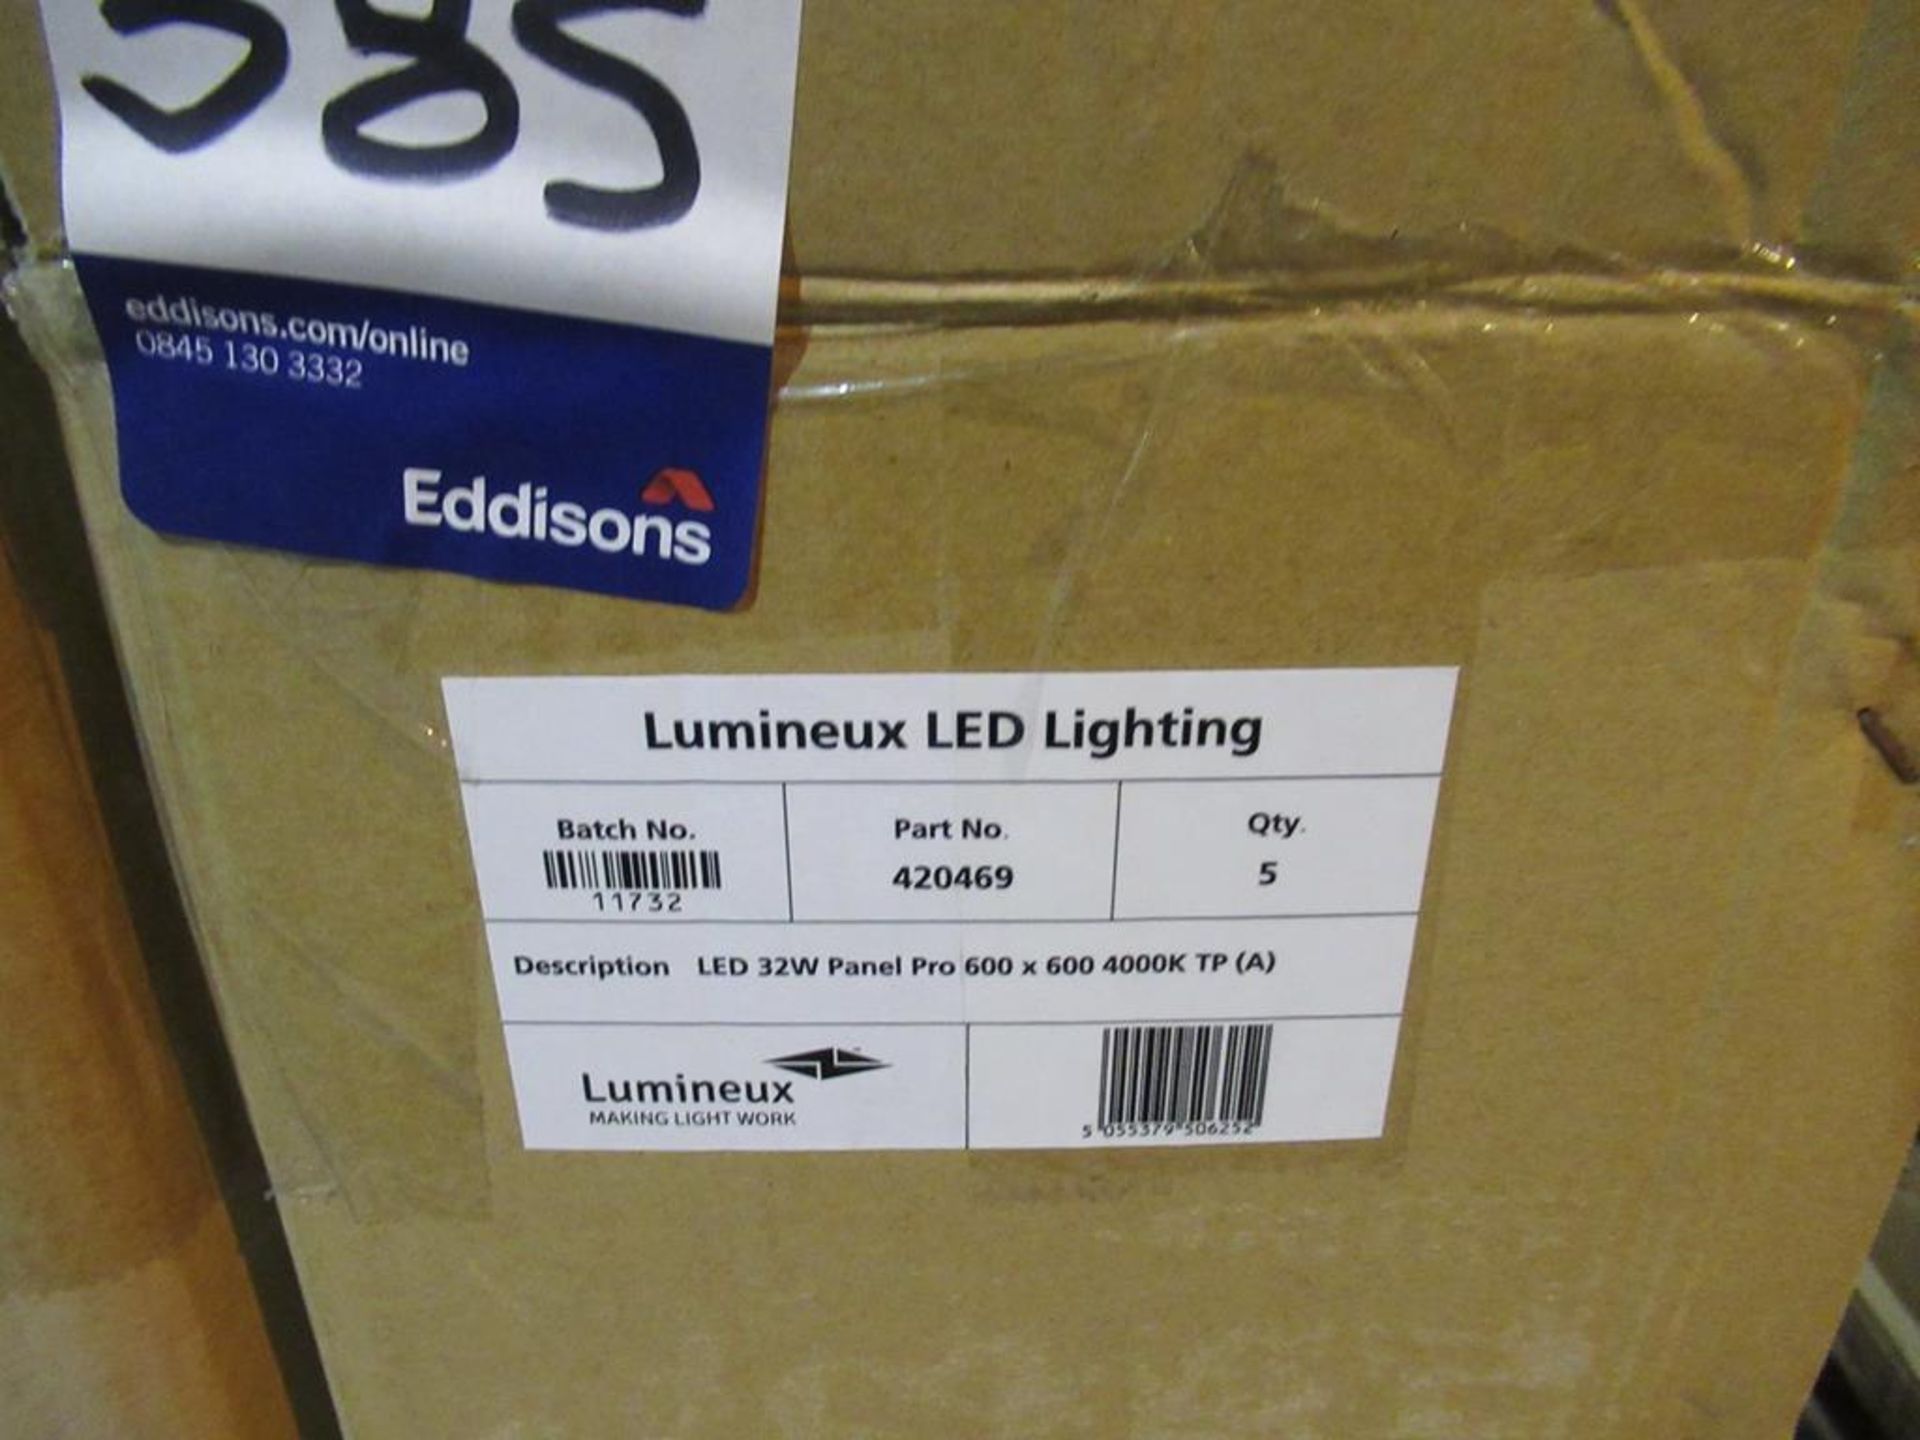 10 x Lumineux 32W 600x600 LED Panel 4000K White TP(b) NO DRIVERS OEM Trade Price £ 220 - Image 2 of 3